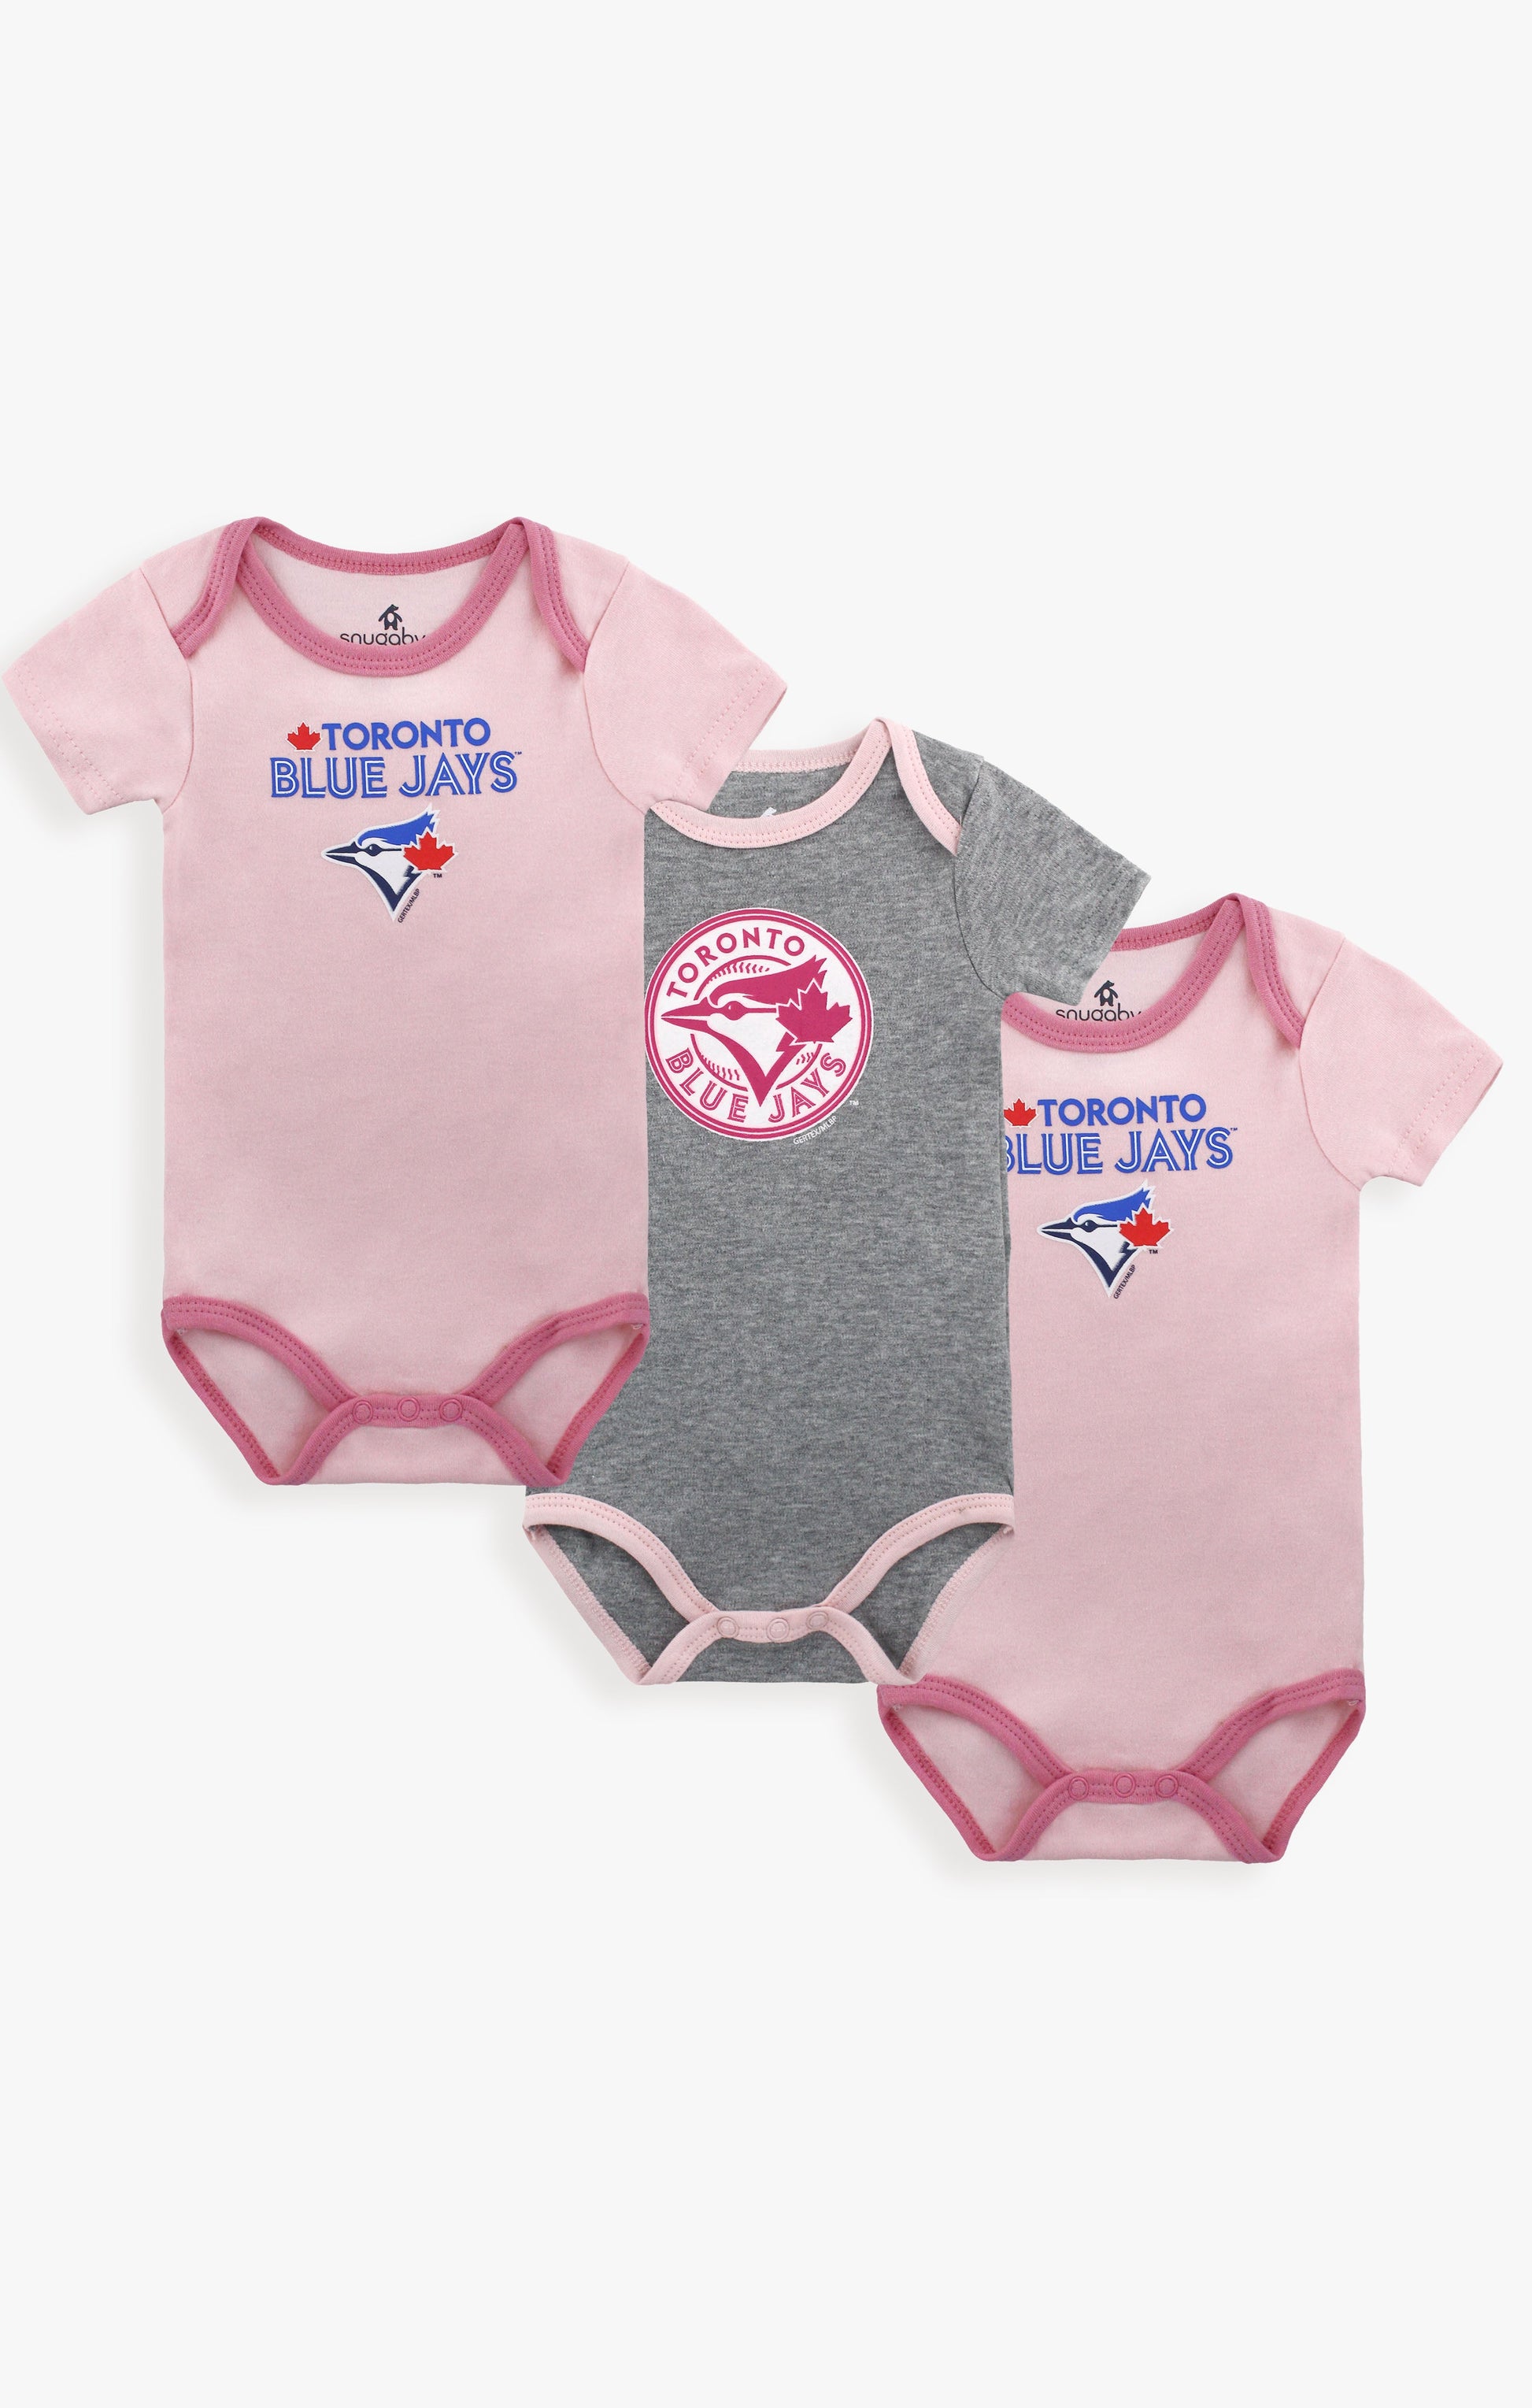 Gertex MLB Toronto Blue Jays 3 Pack Baby Onesie Body Suits in Pink